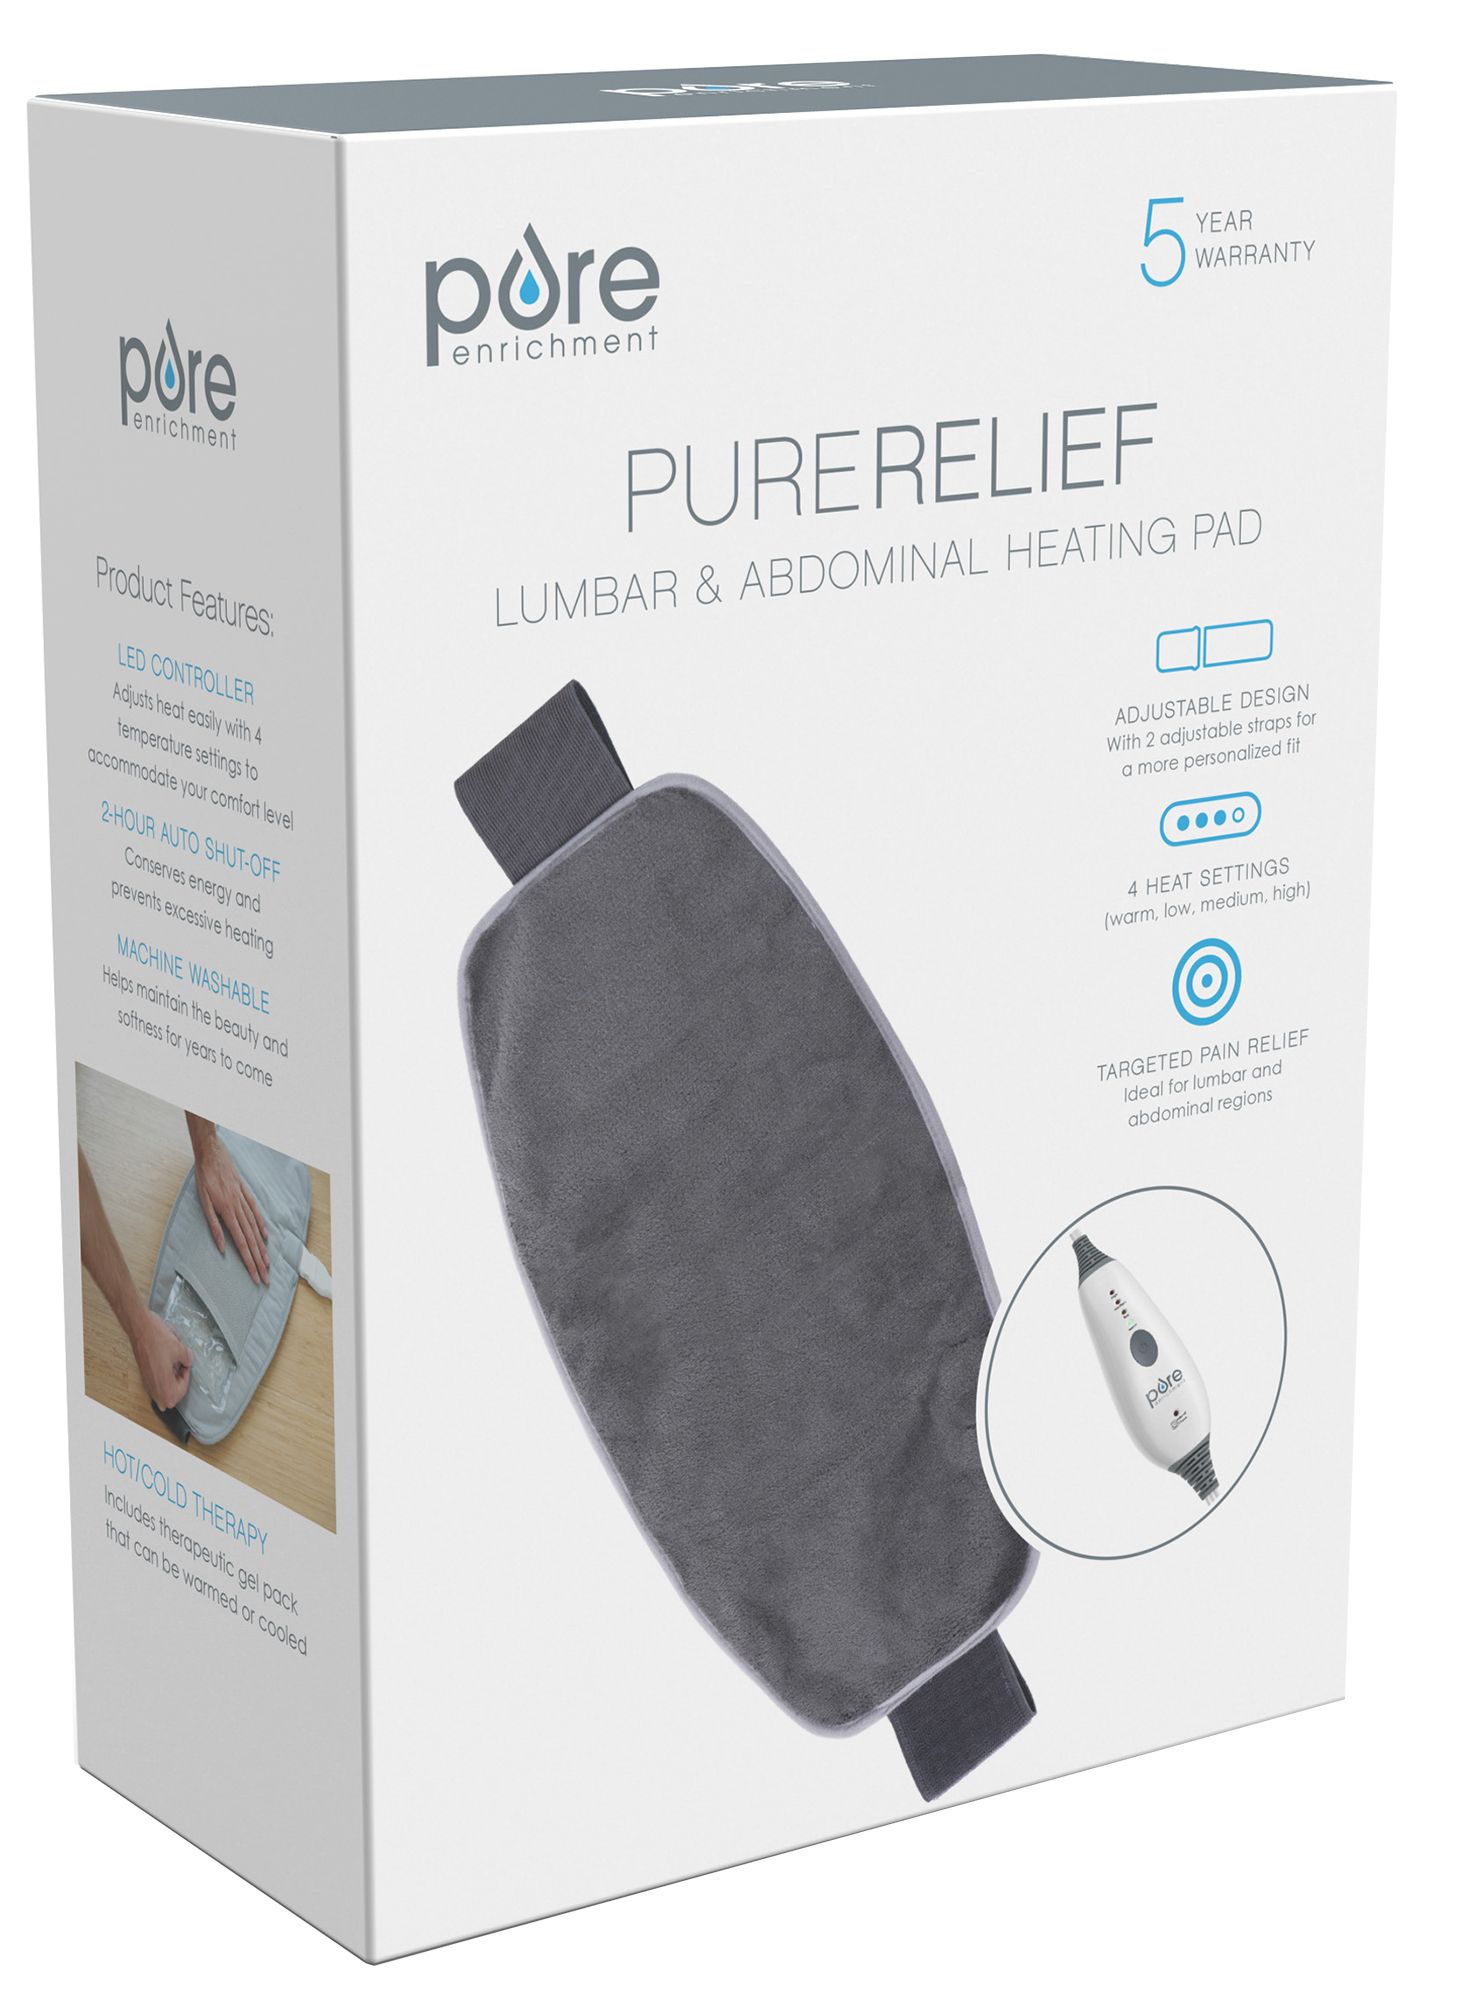 Pure Enrichment PureRelief Lumbar & Abdominal Heating Pad